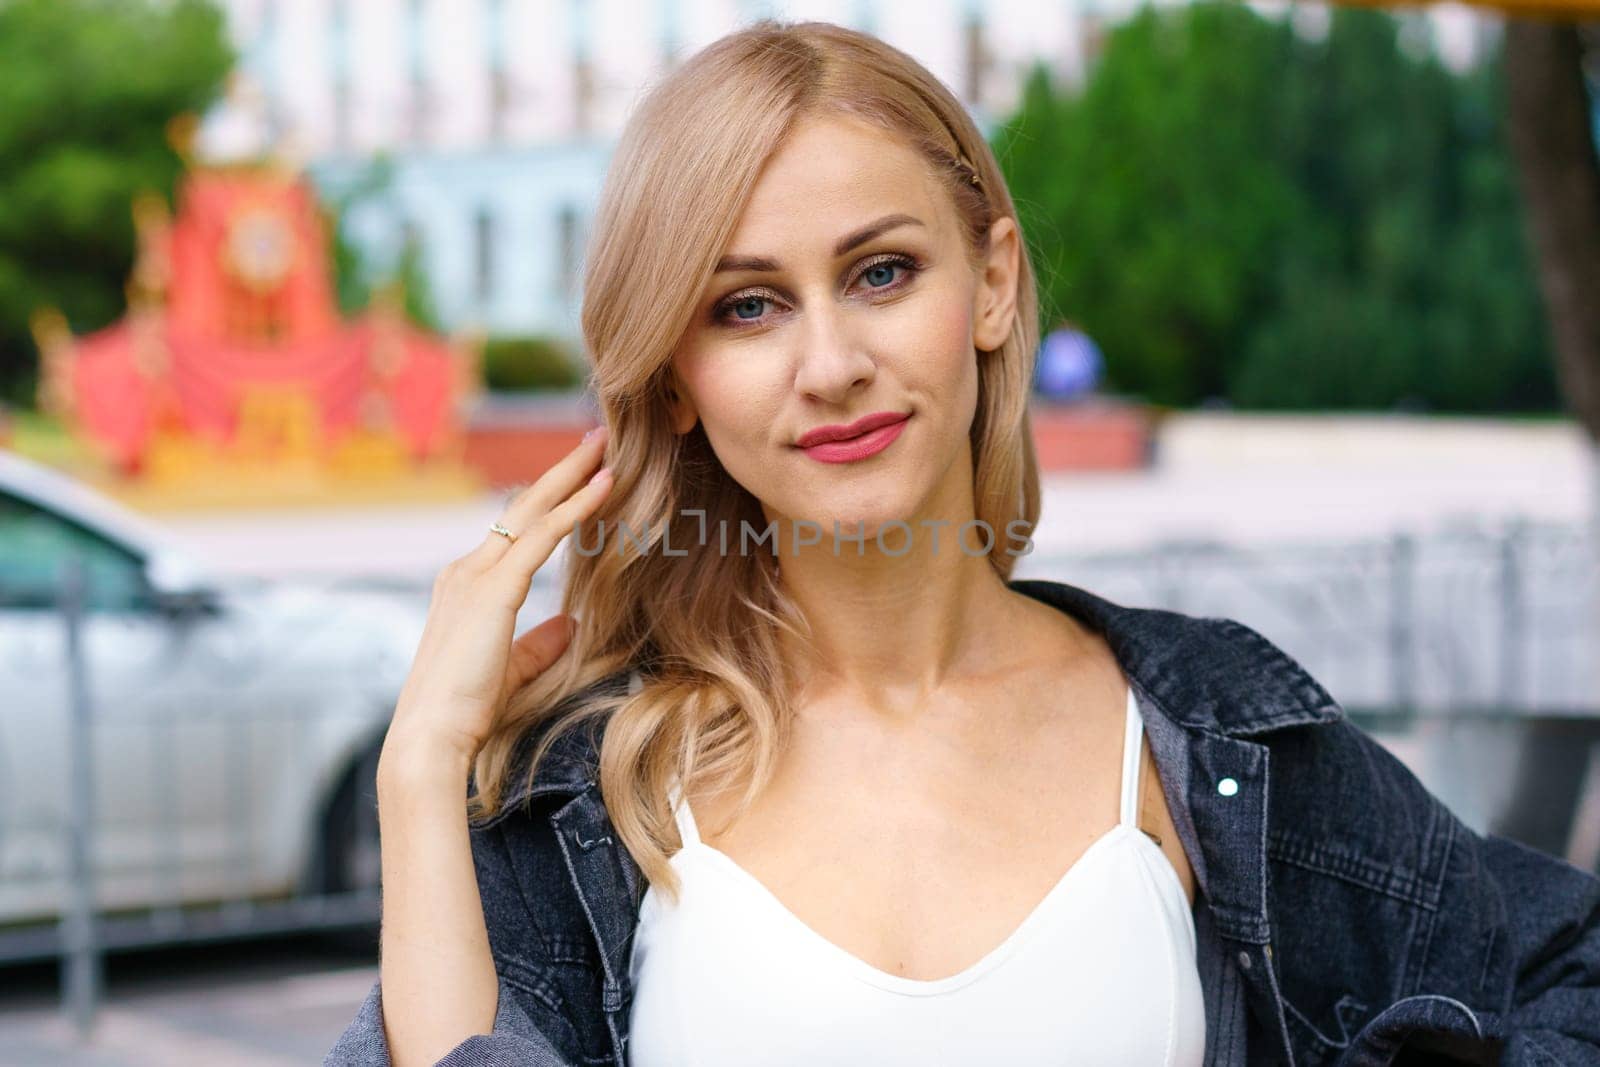 Portrait of a blonde woman on a city street by EkaterinaPereslavtseva